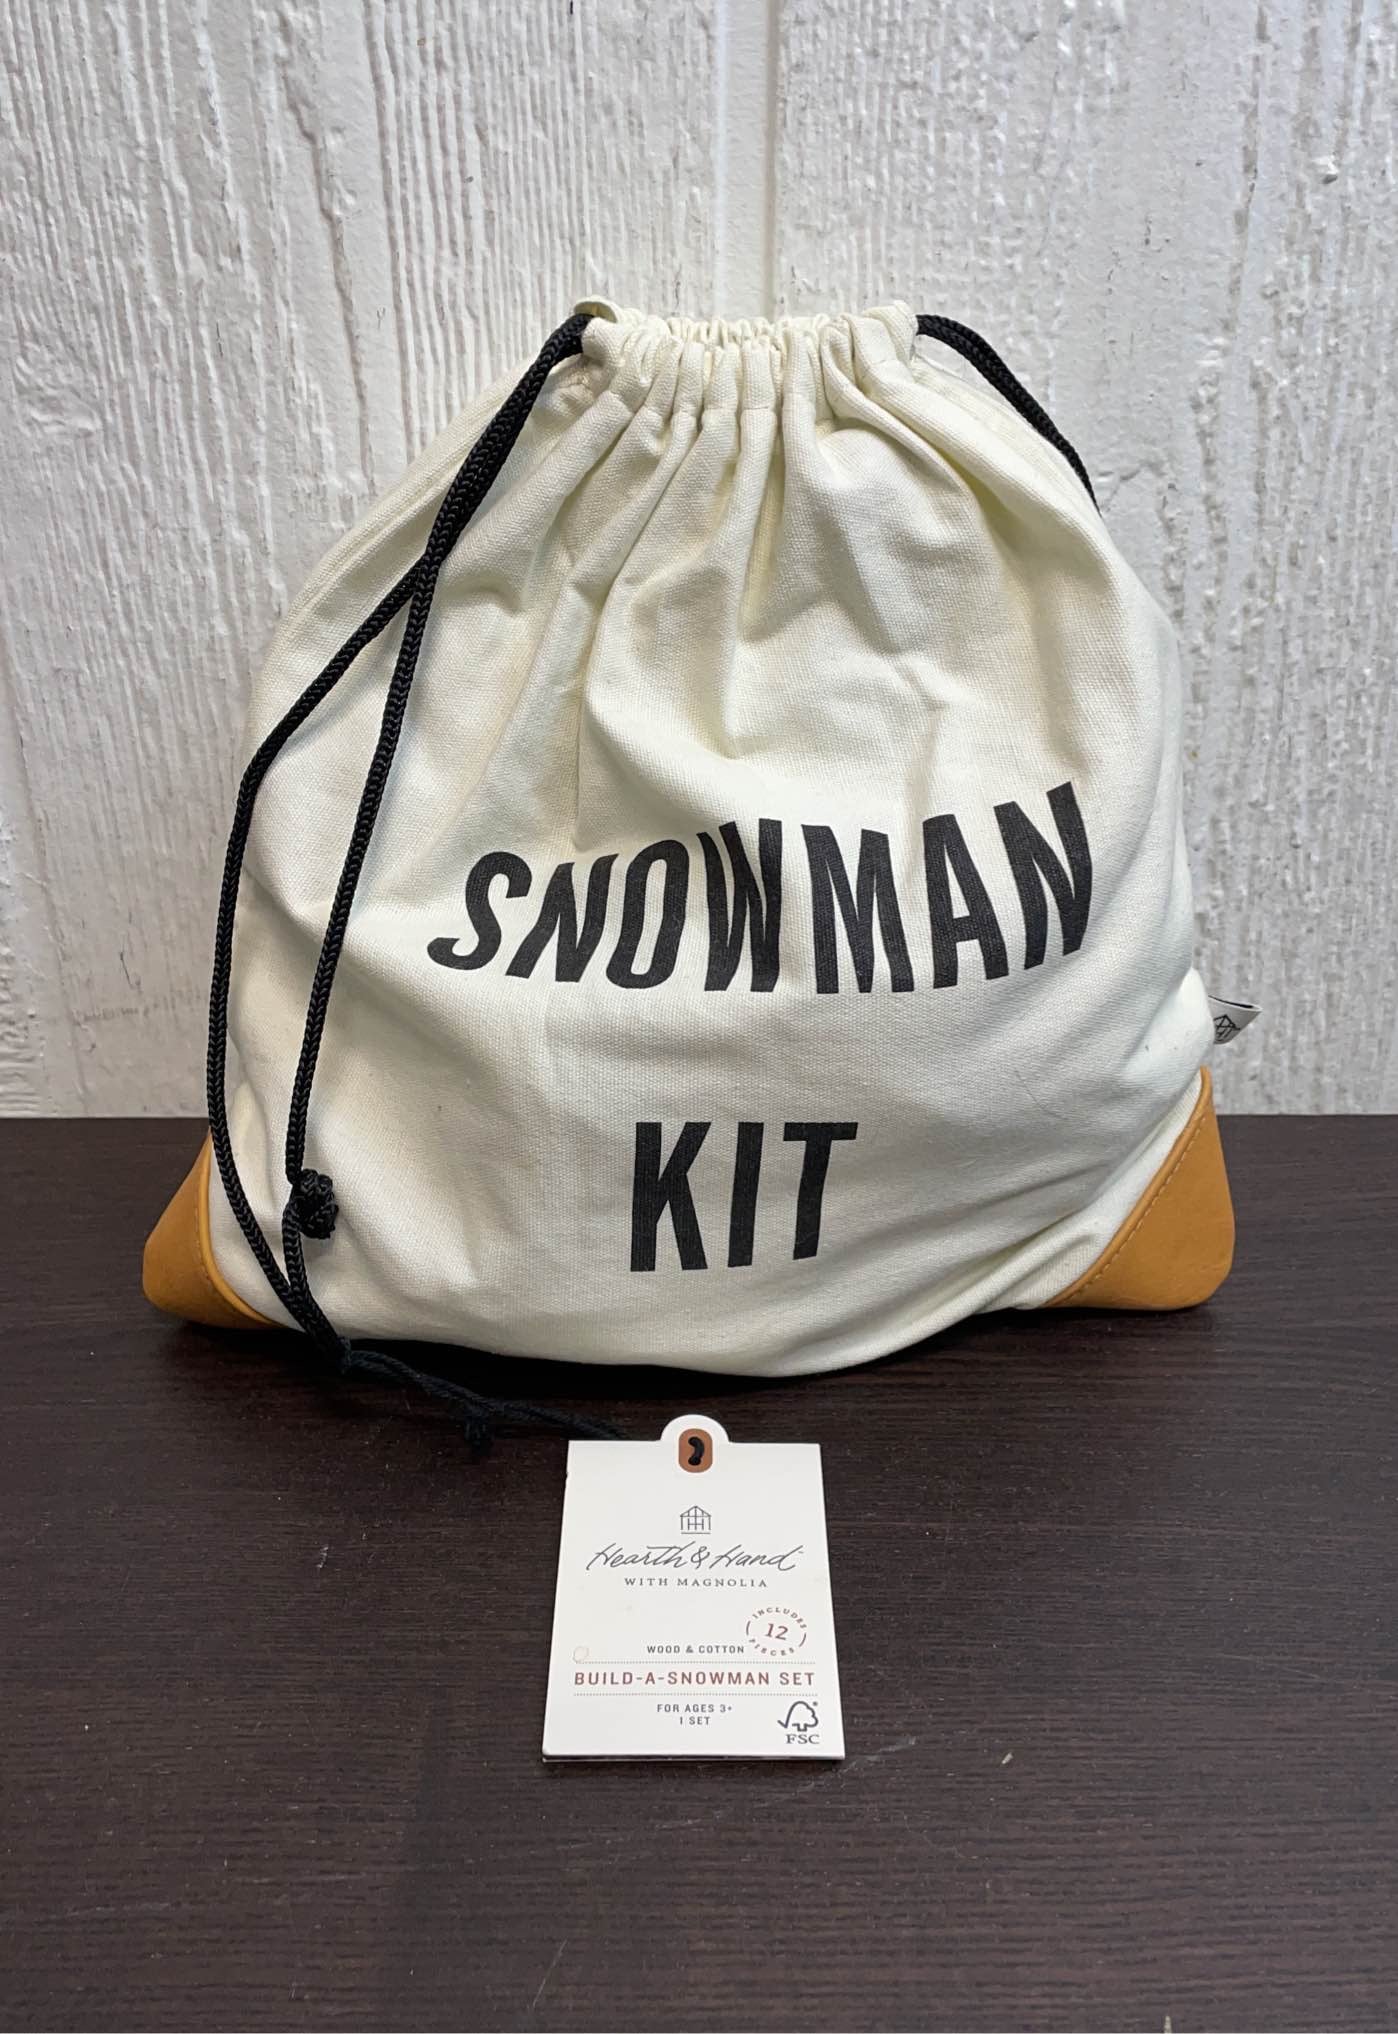 Hearth & Hand Magnolia Build-A-Snowman Kit